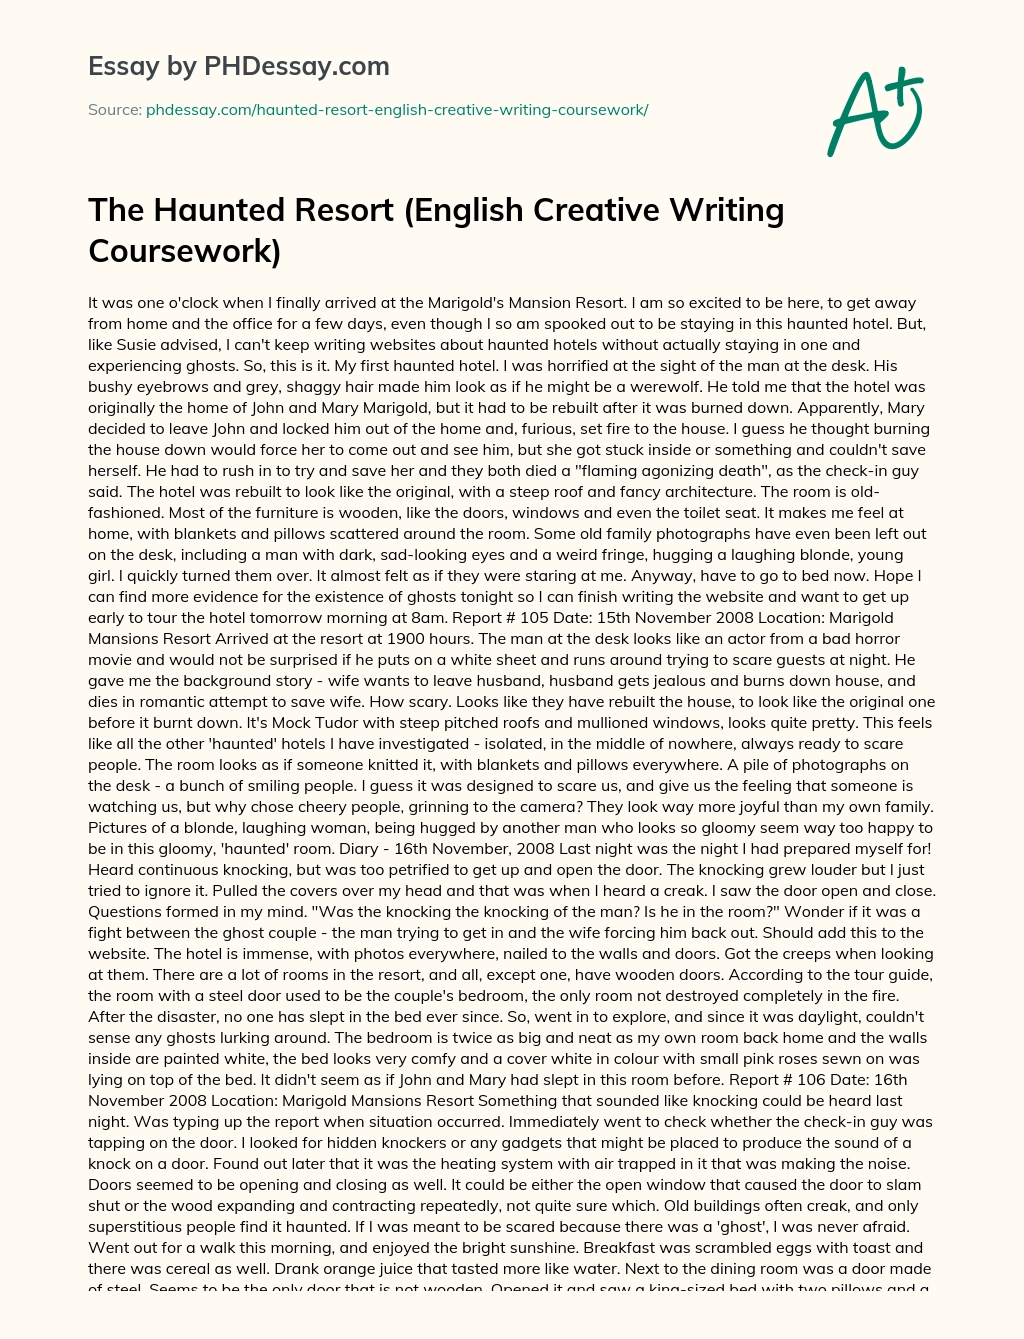 The Haunted Resort (English Creative Writing Coursework) essay